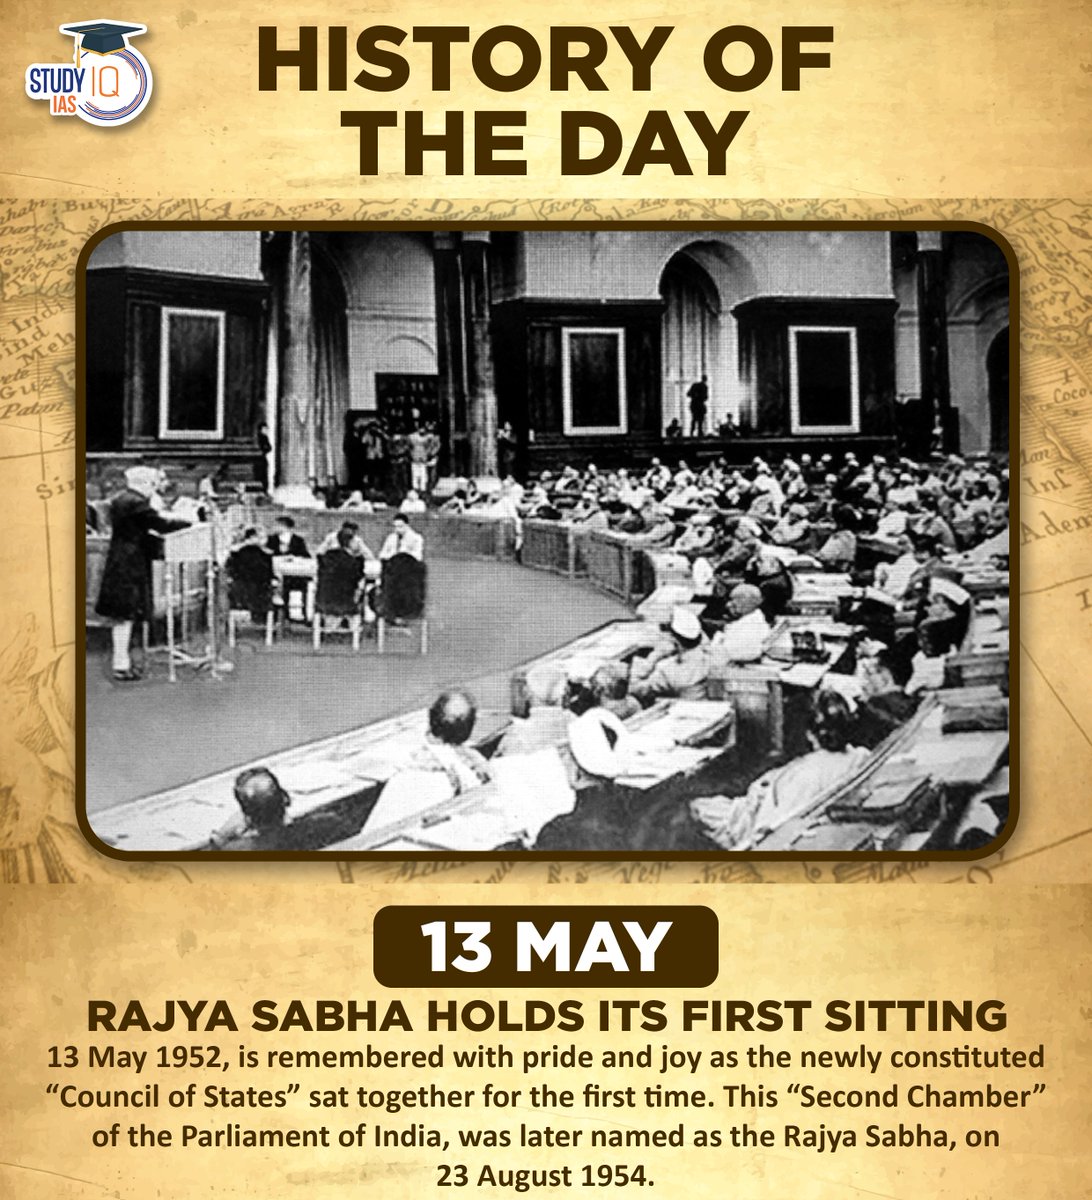 History of The Day

#historyoftheday #todayhistory #rajyasabha #firstsittingofrajyasabha #pride #councilofstates #secondchamberofparliament #parliament #parliamentofindia #upsc #cse #ips #ias